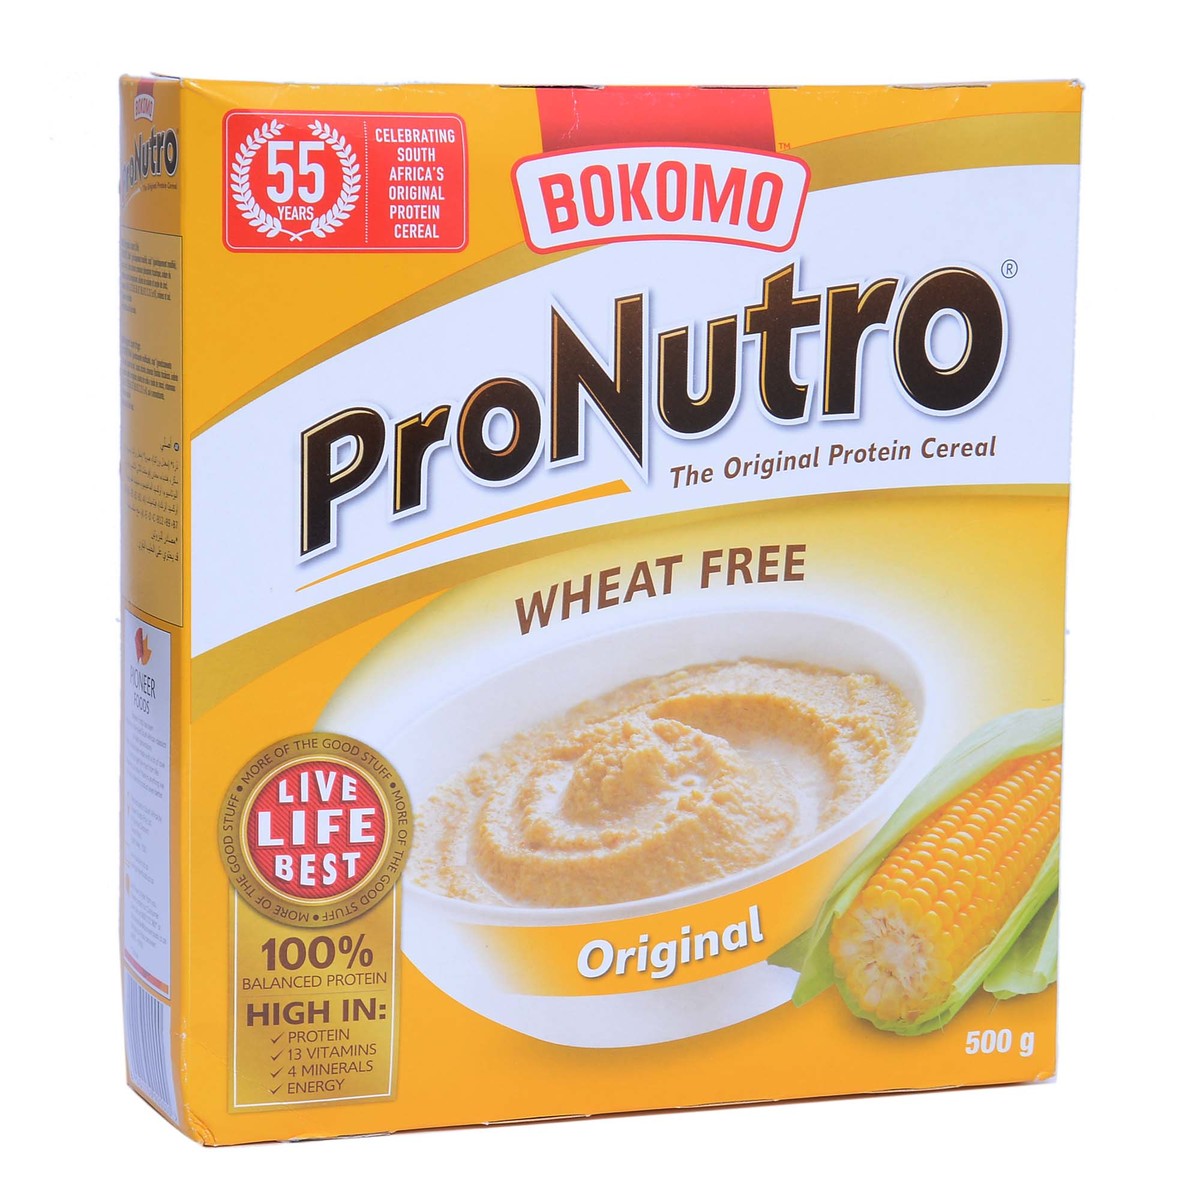 Bokomo Pronutro Wheat Free 500g - Original